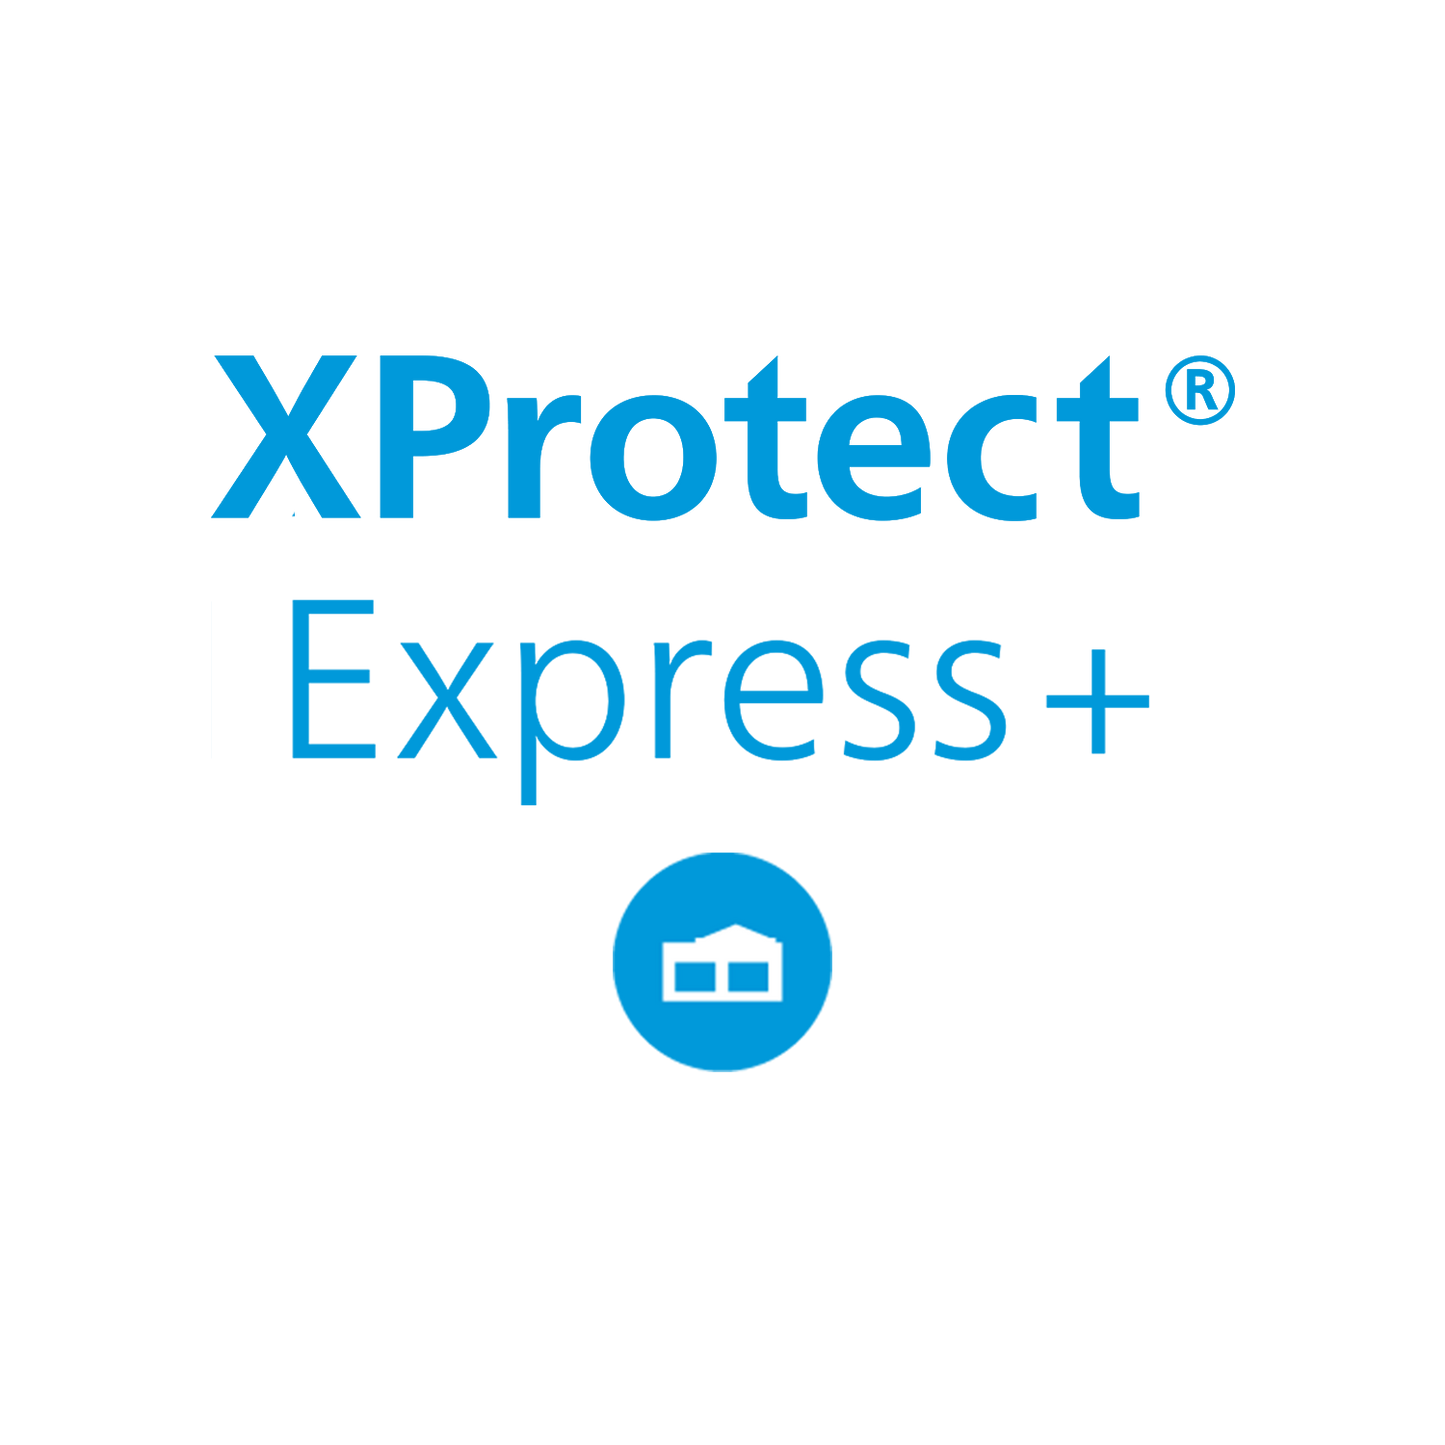 Milestone XProtect Essentials+ / Express+ / Professional+